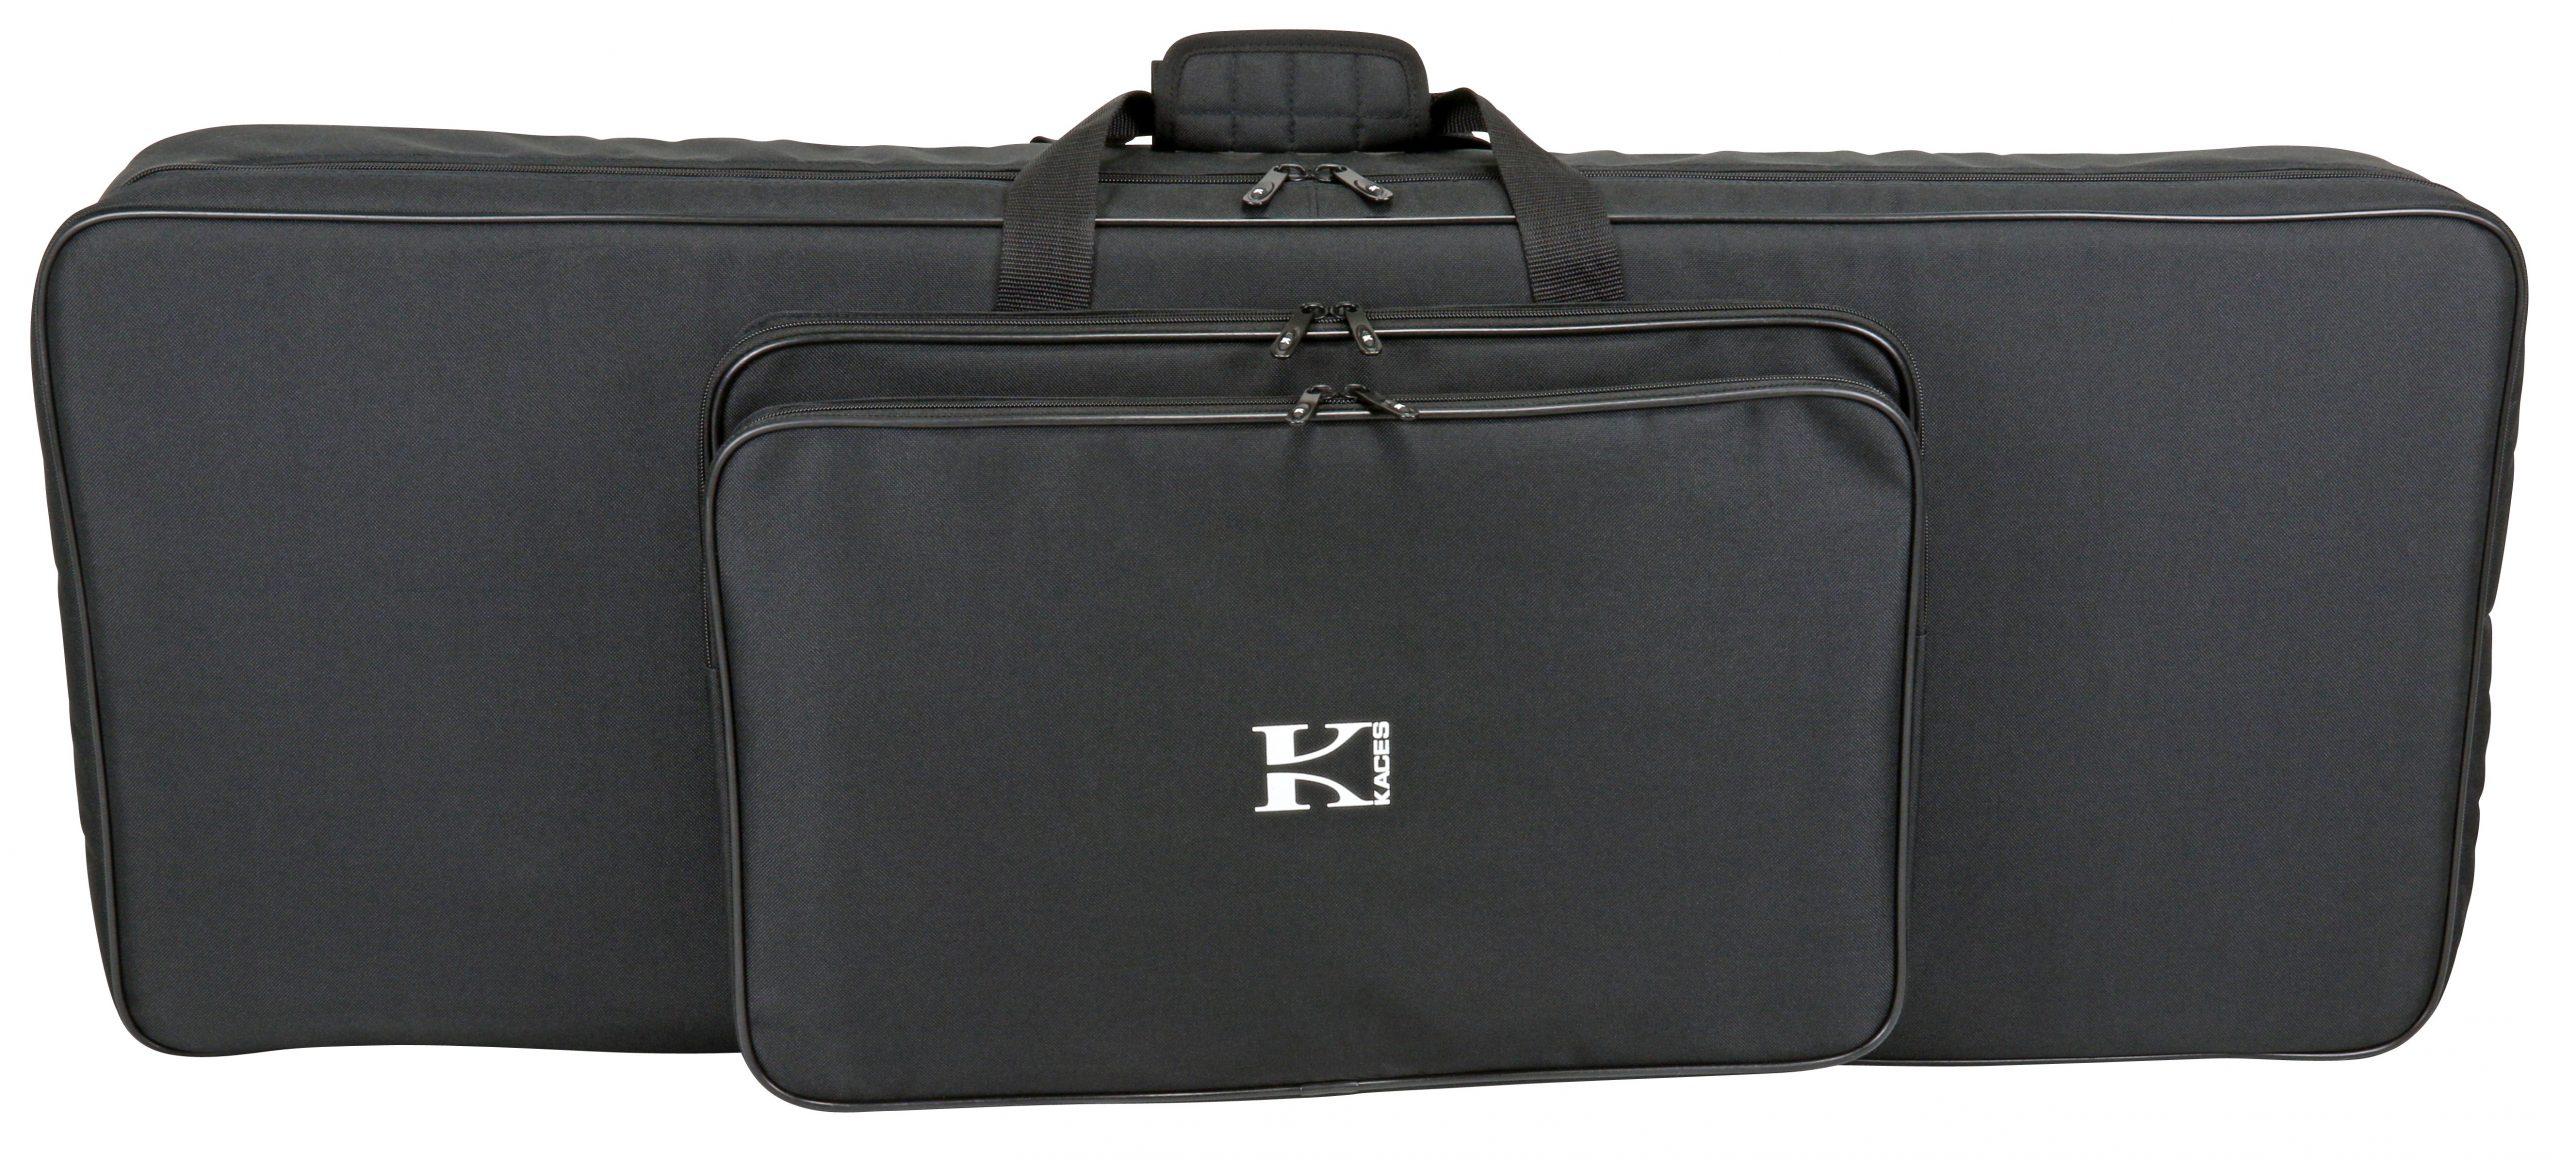 Xpress Keyboard Bag, 61 Note